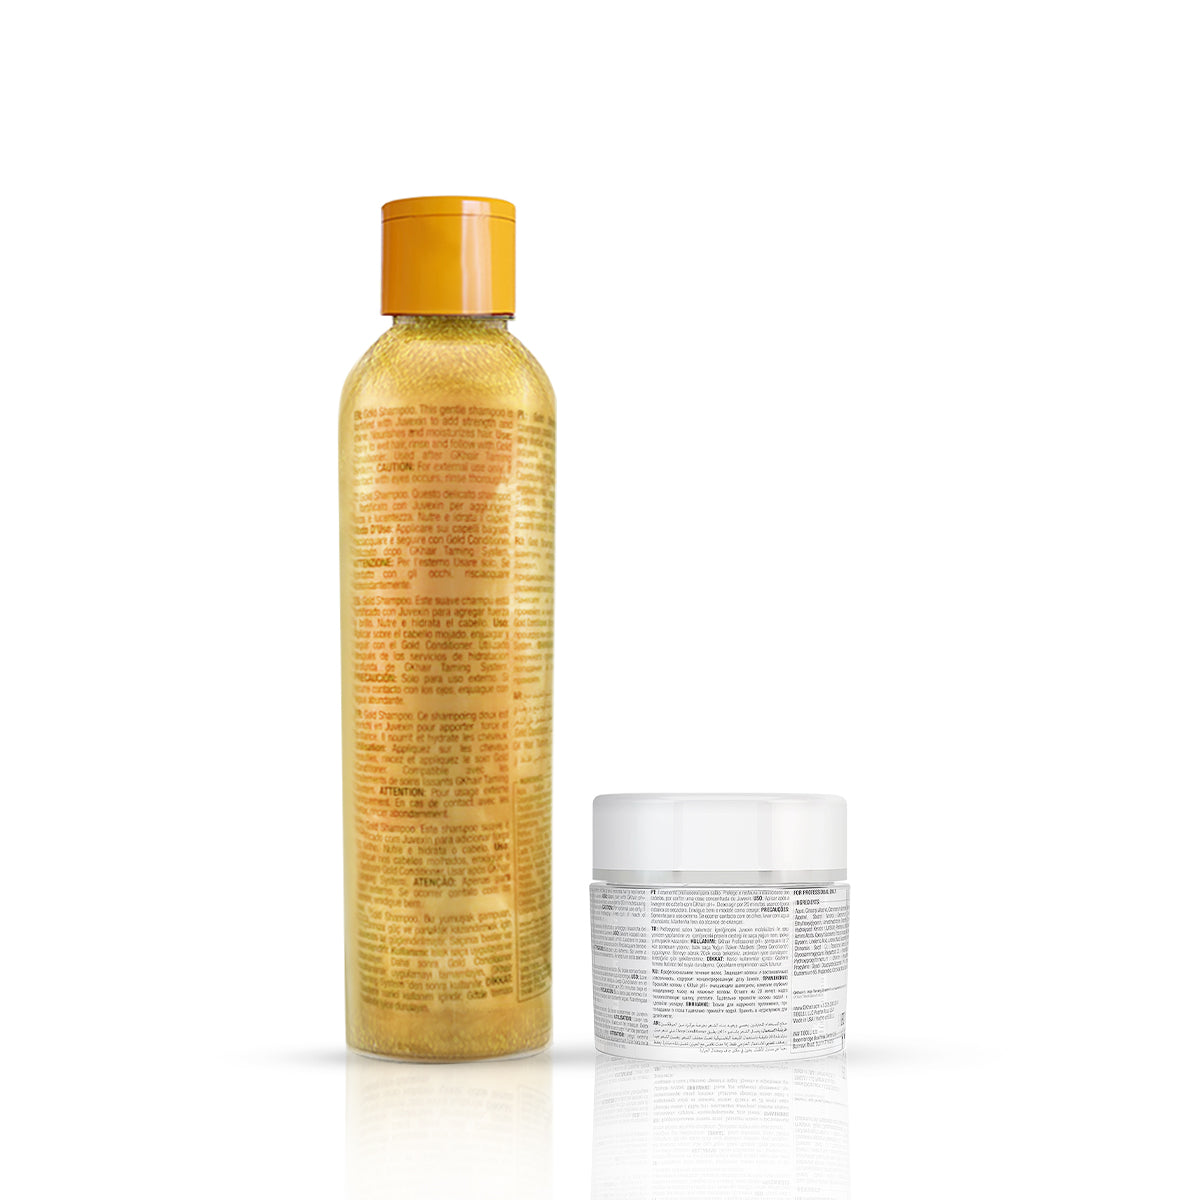 GK Hair Gold Shampoo 250 Ml and Deep Conditioner Masque 200 G Set